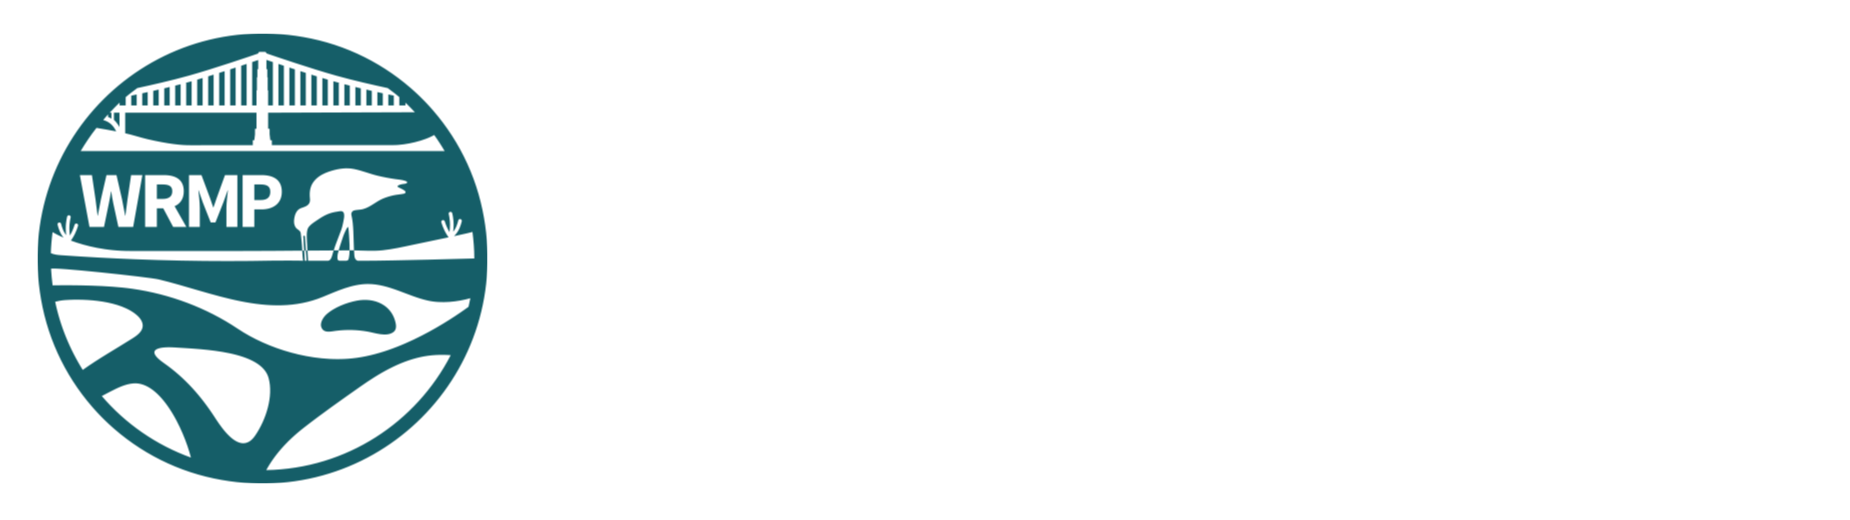 Wetlands Regional Monitoring Program